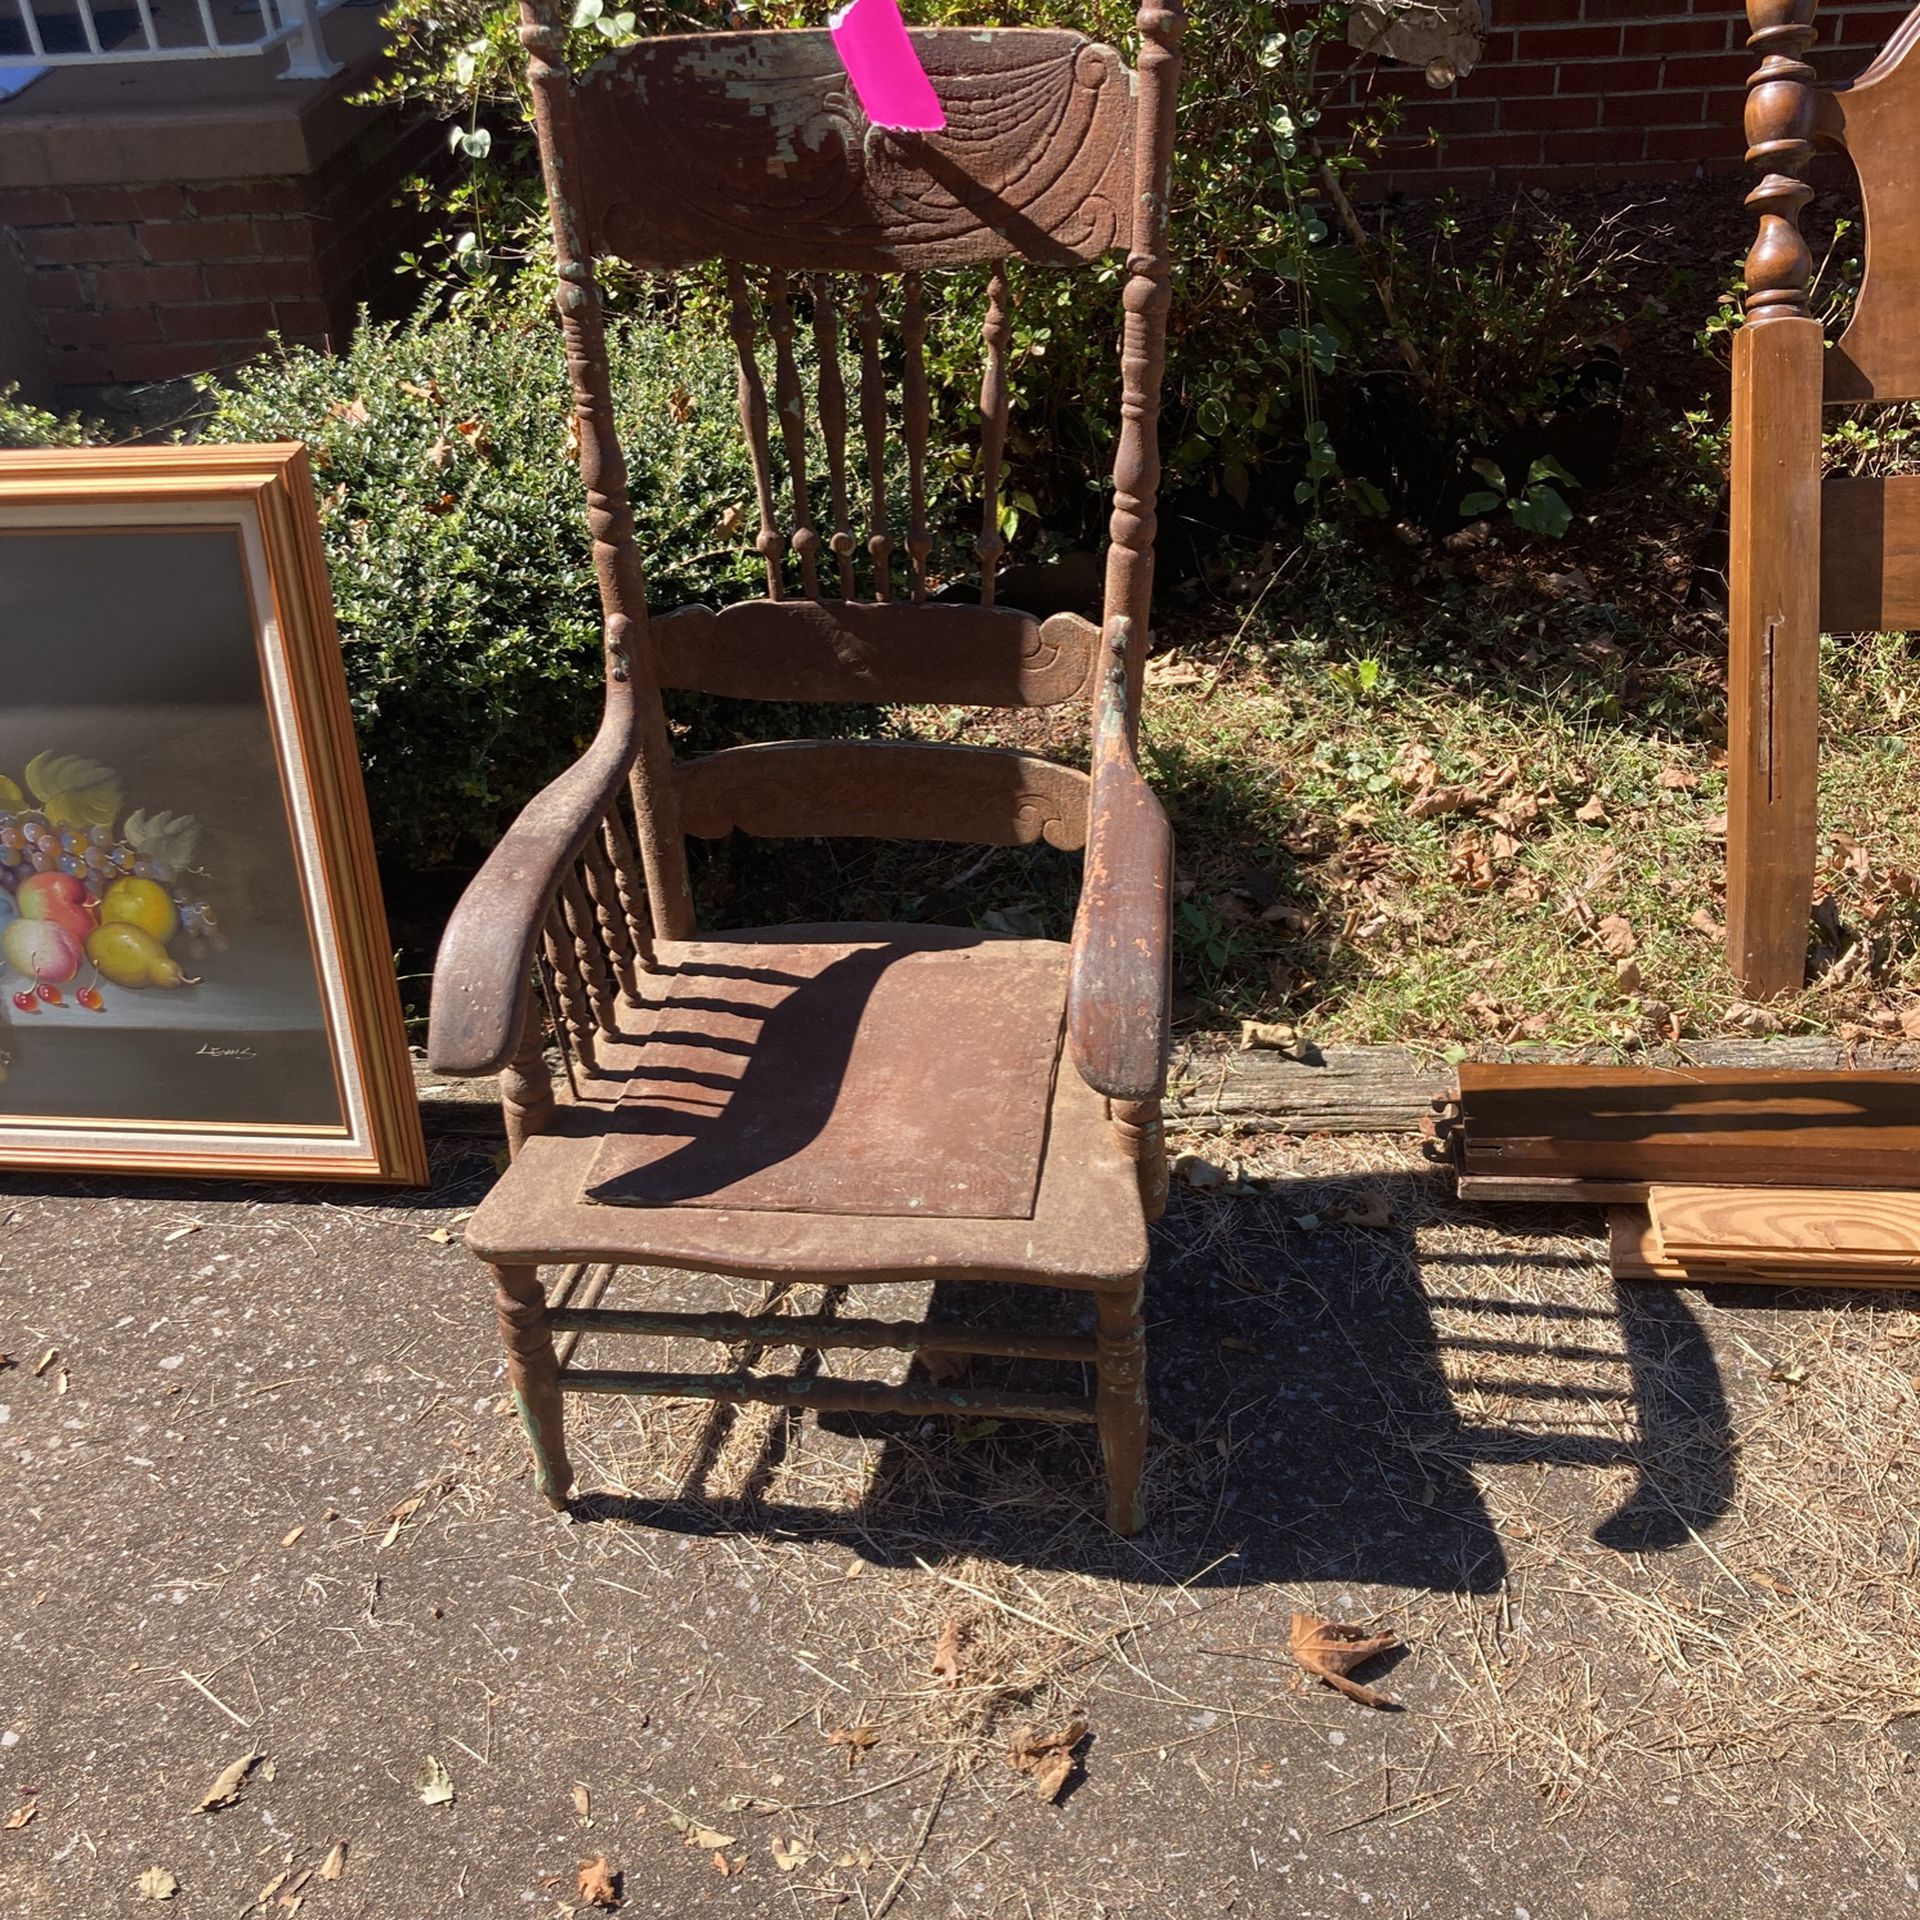 Antique  Chair